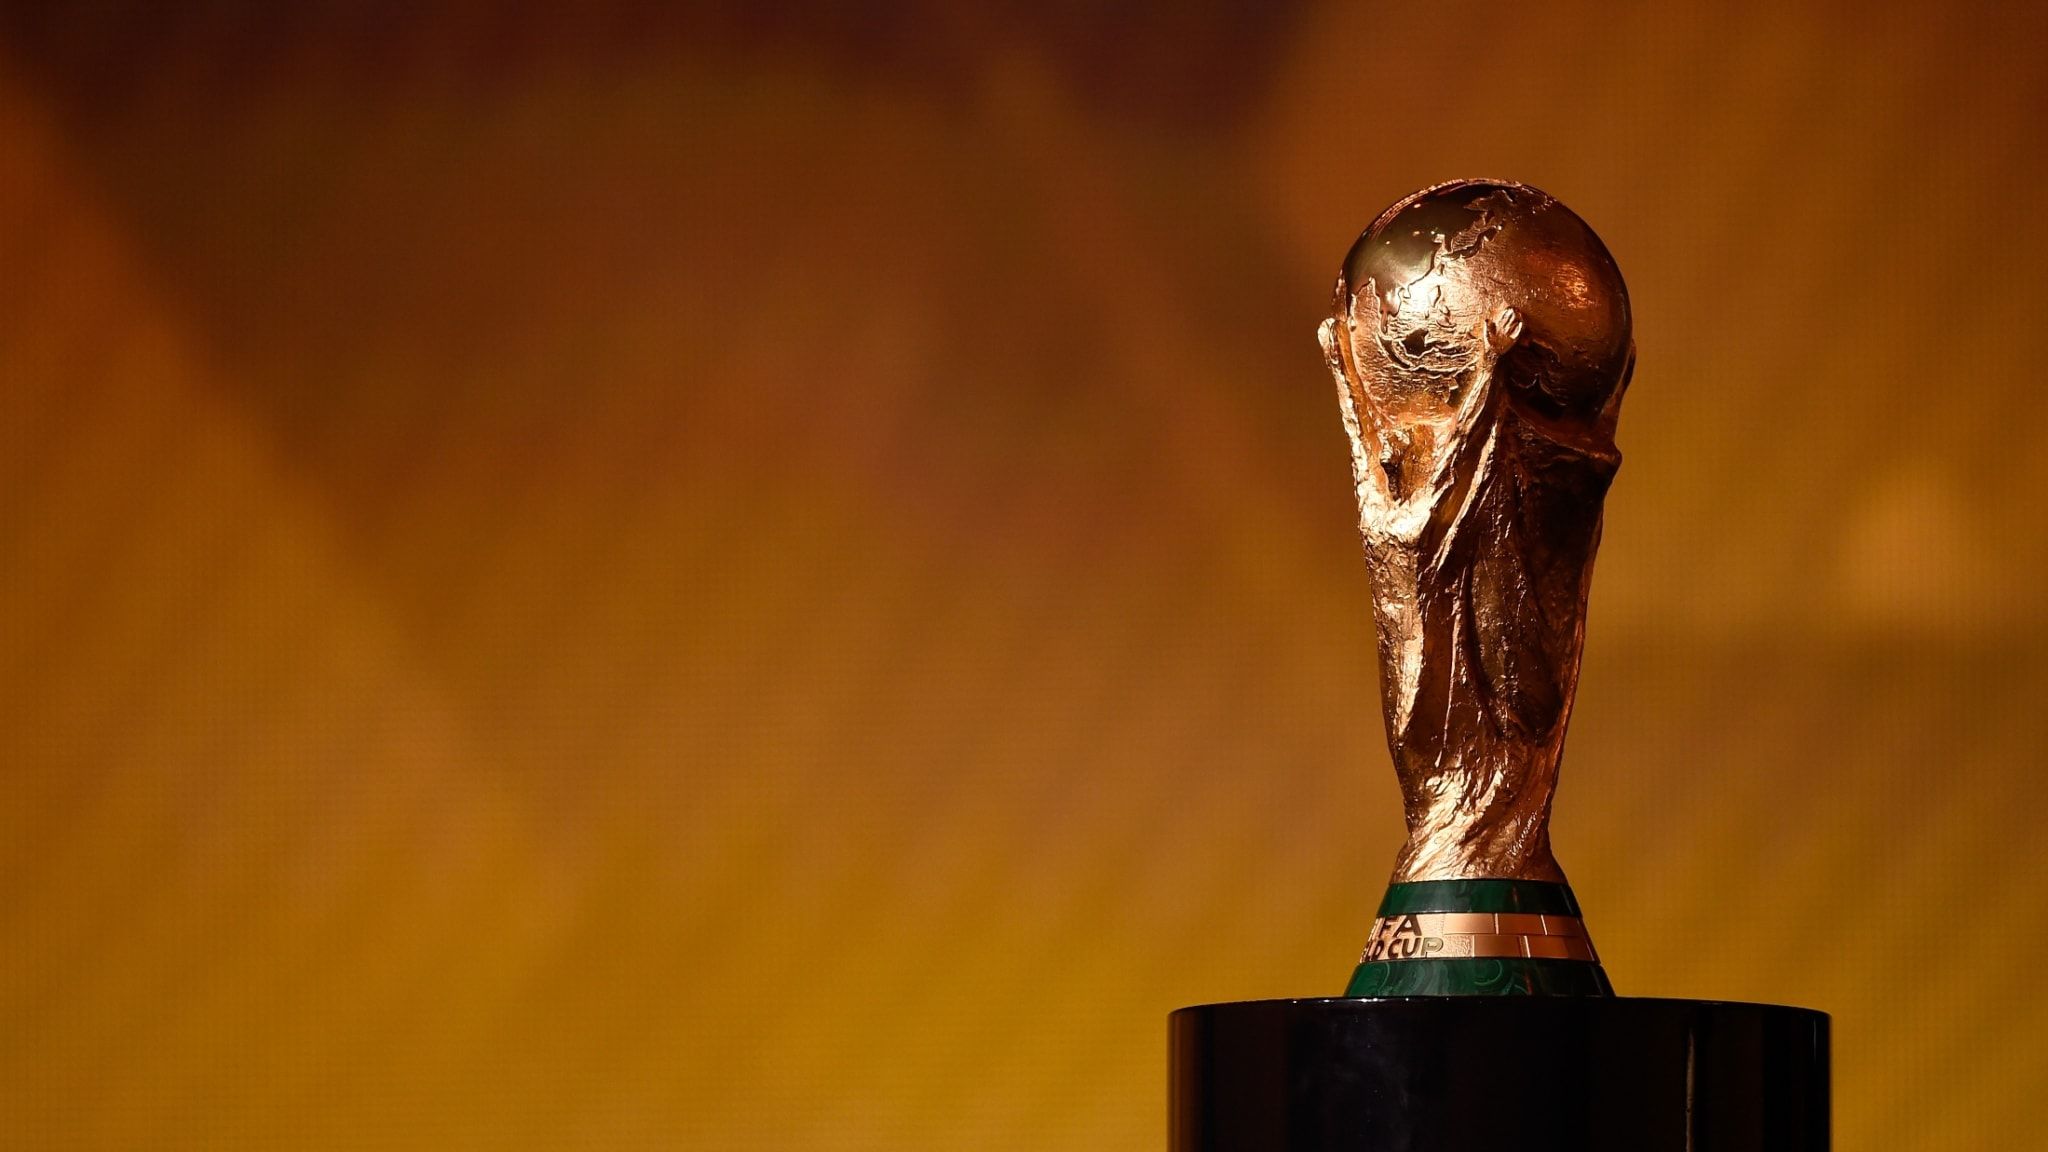 2022 world cup trophy wallpaper